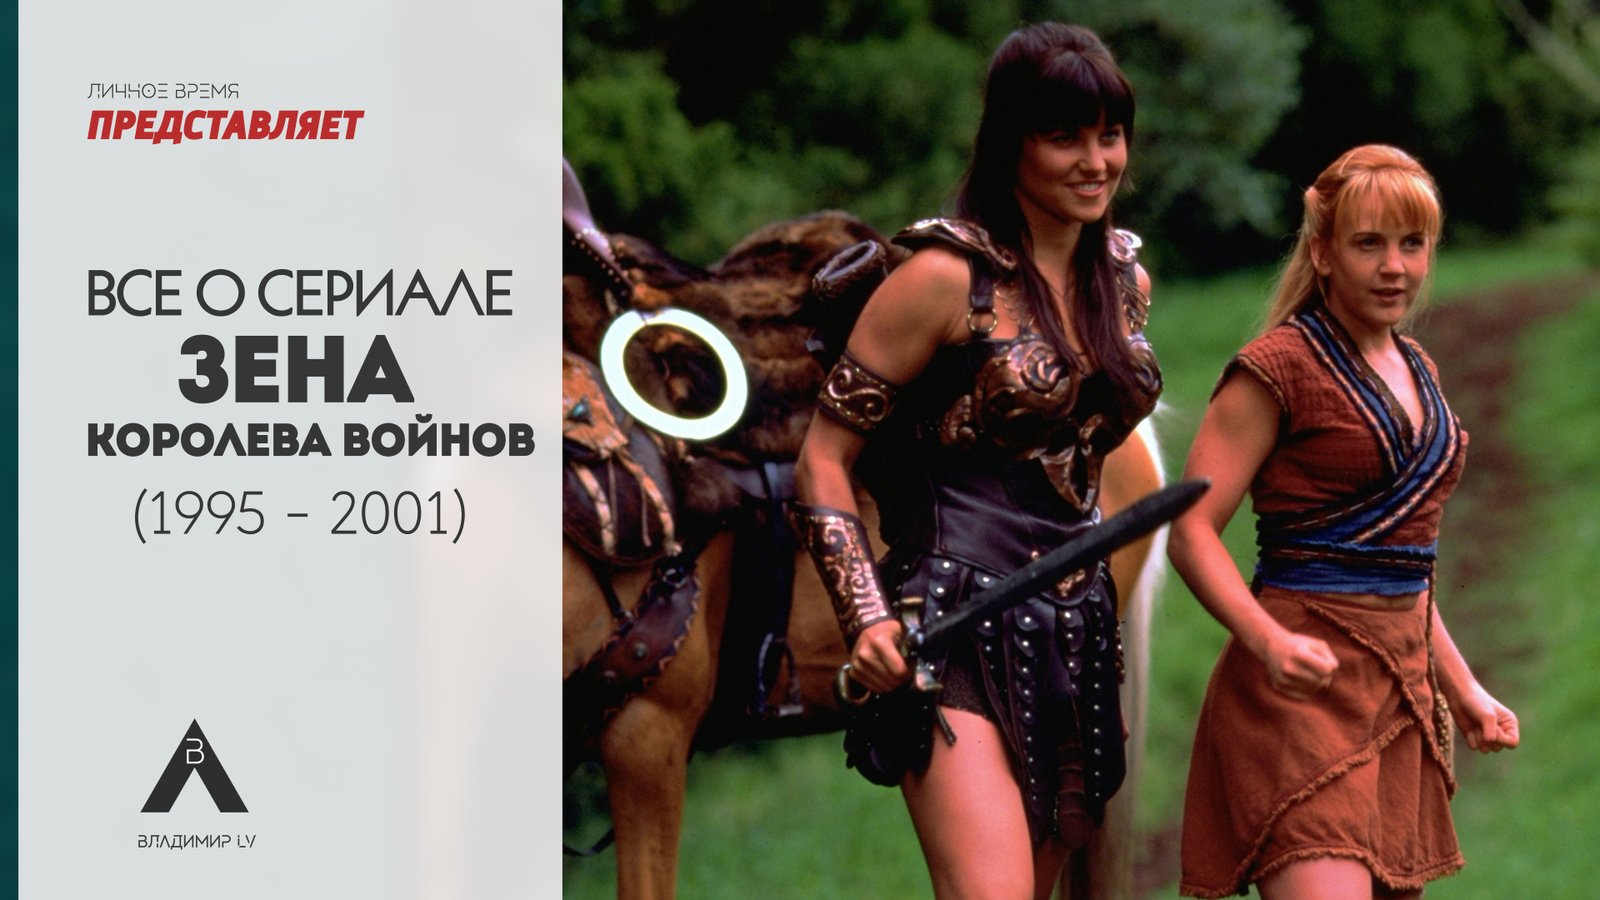 Зена: Королева воинов - Все о сериале (1995 - 2001) .